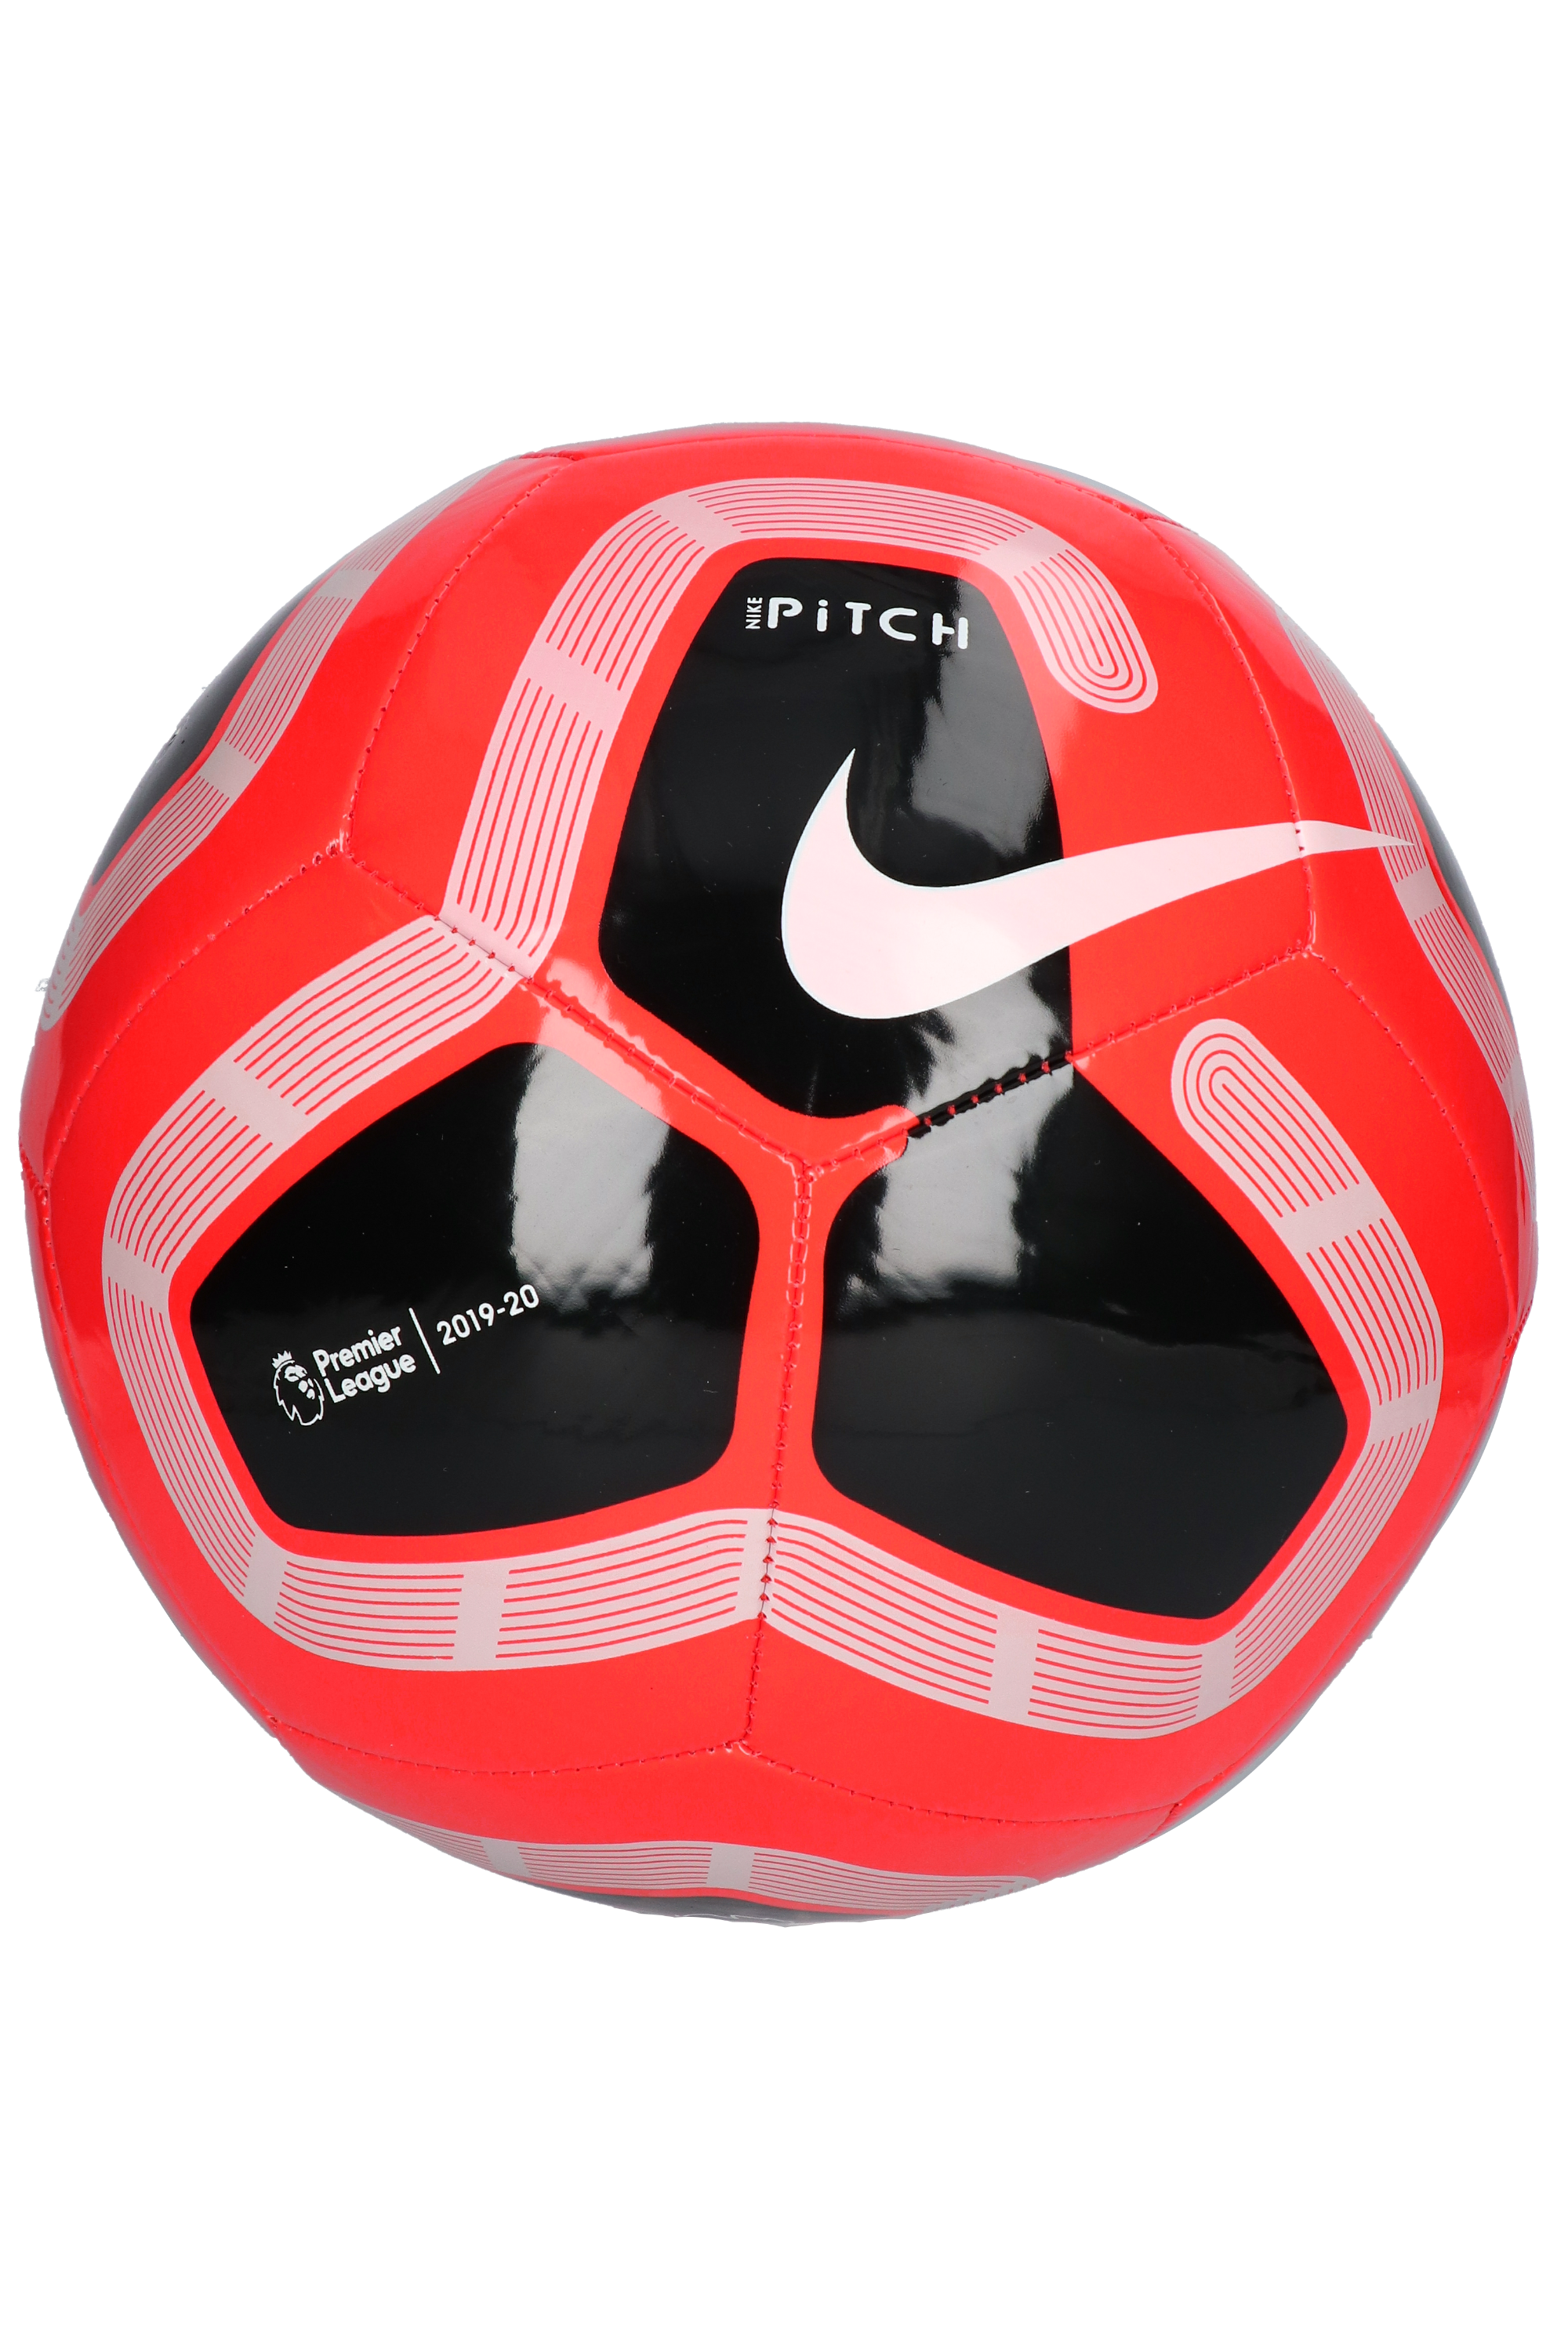 Ball Nike Premier Leauge size 4 | R-GOL.com - Football boots \u0026 equipment